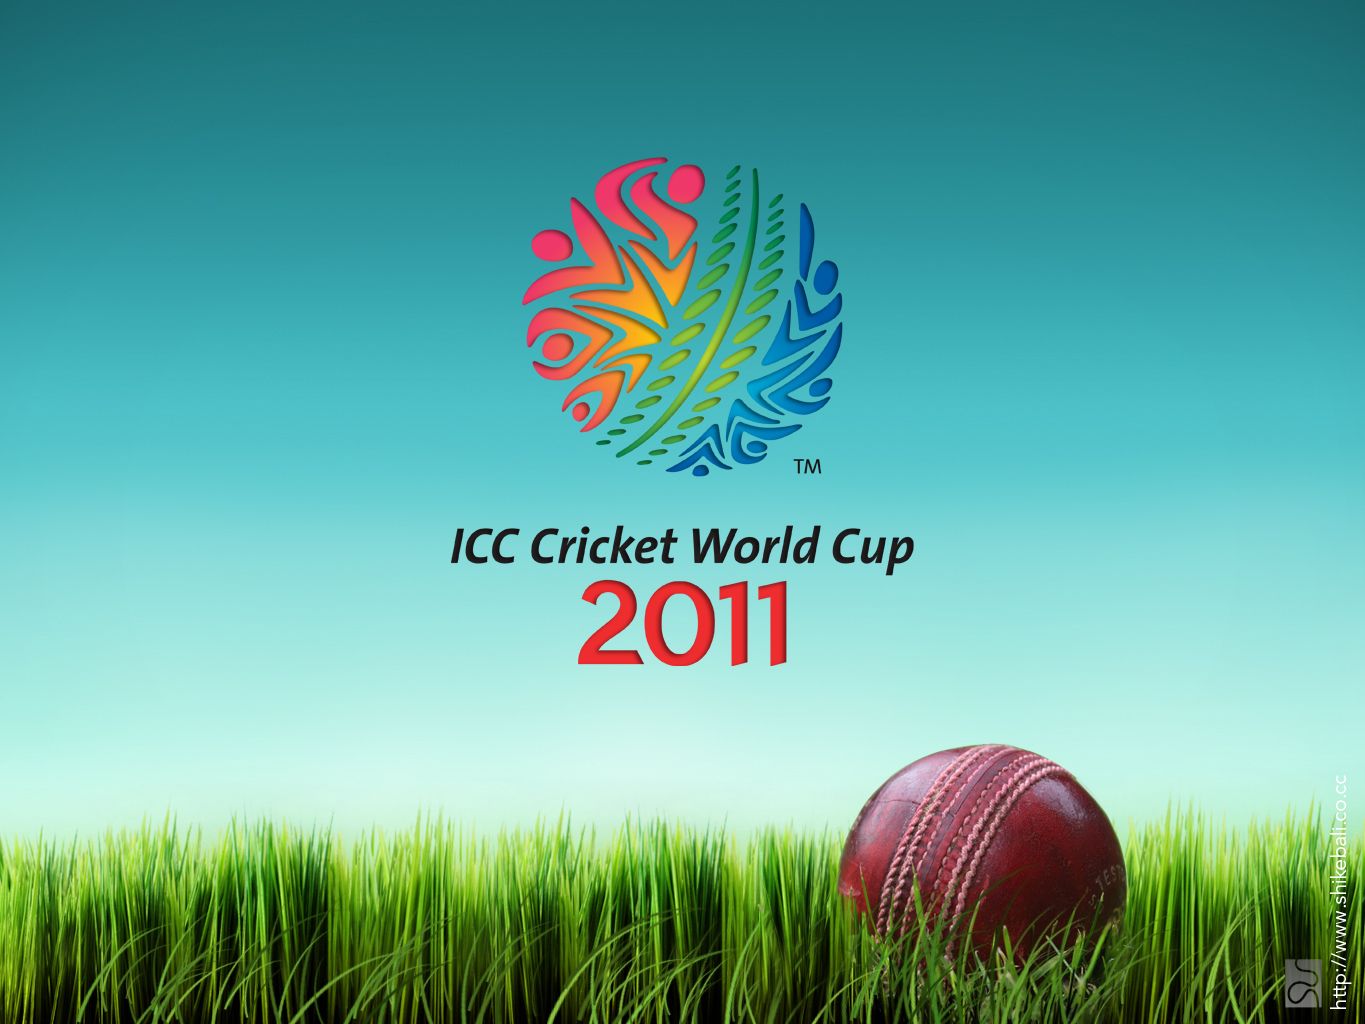 Kreative Creative: ICC Cricket World Cup 2011